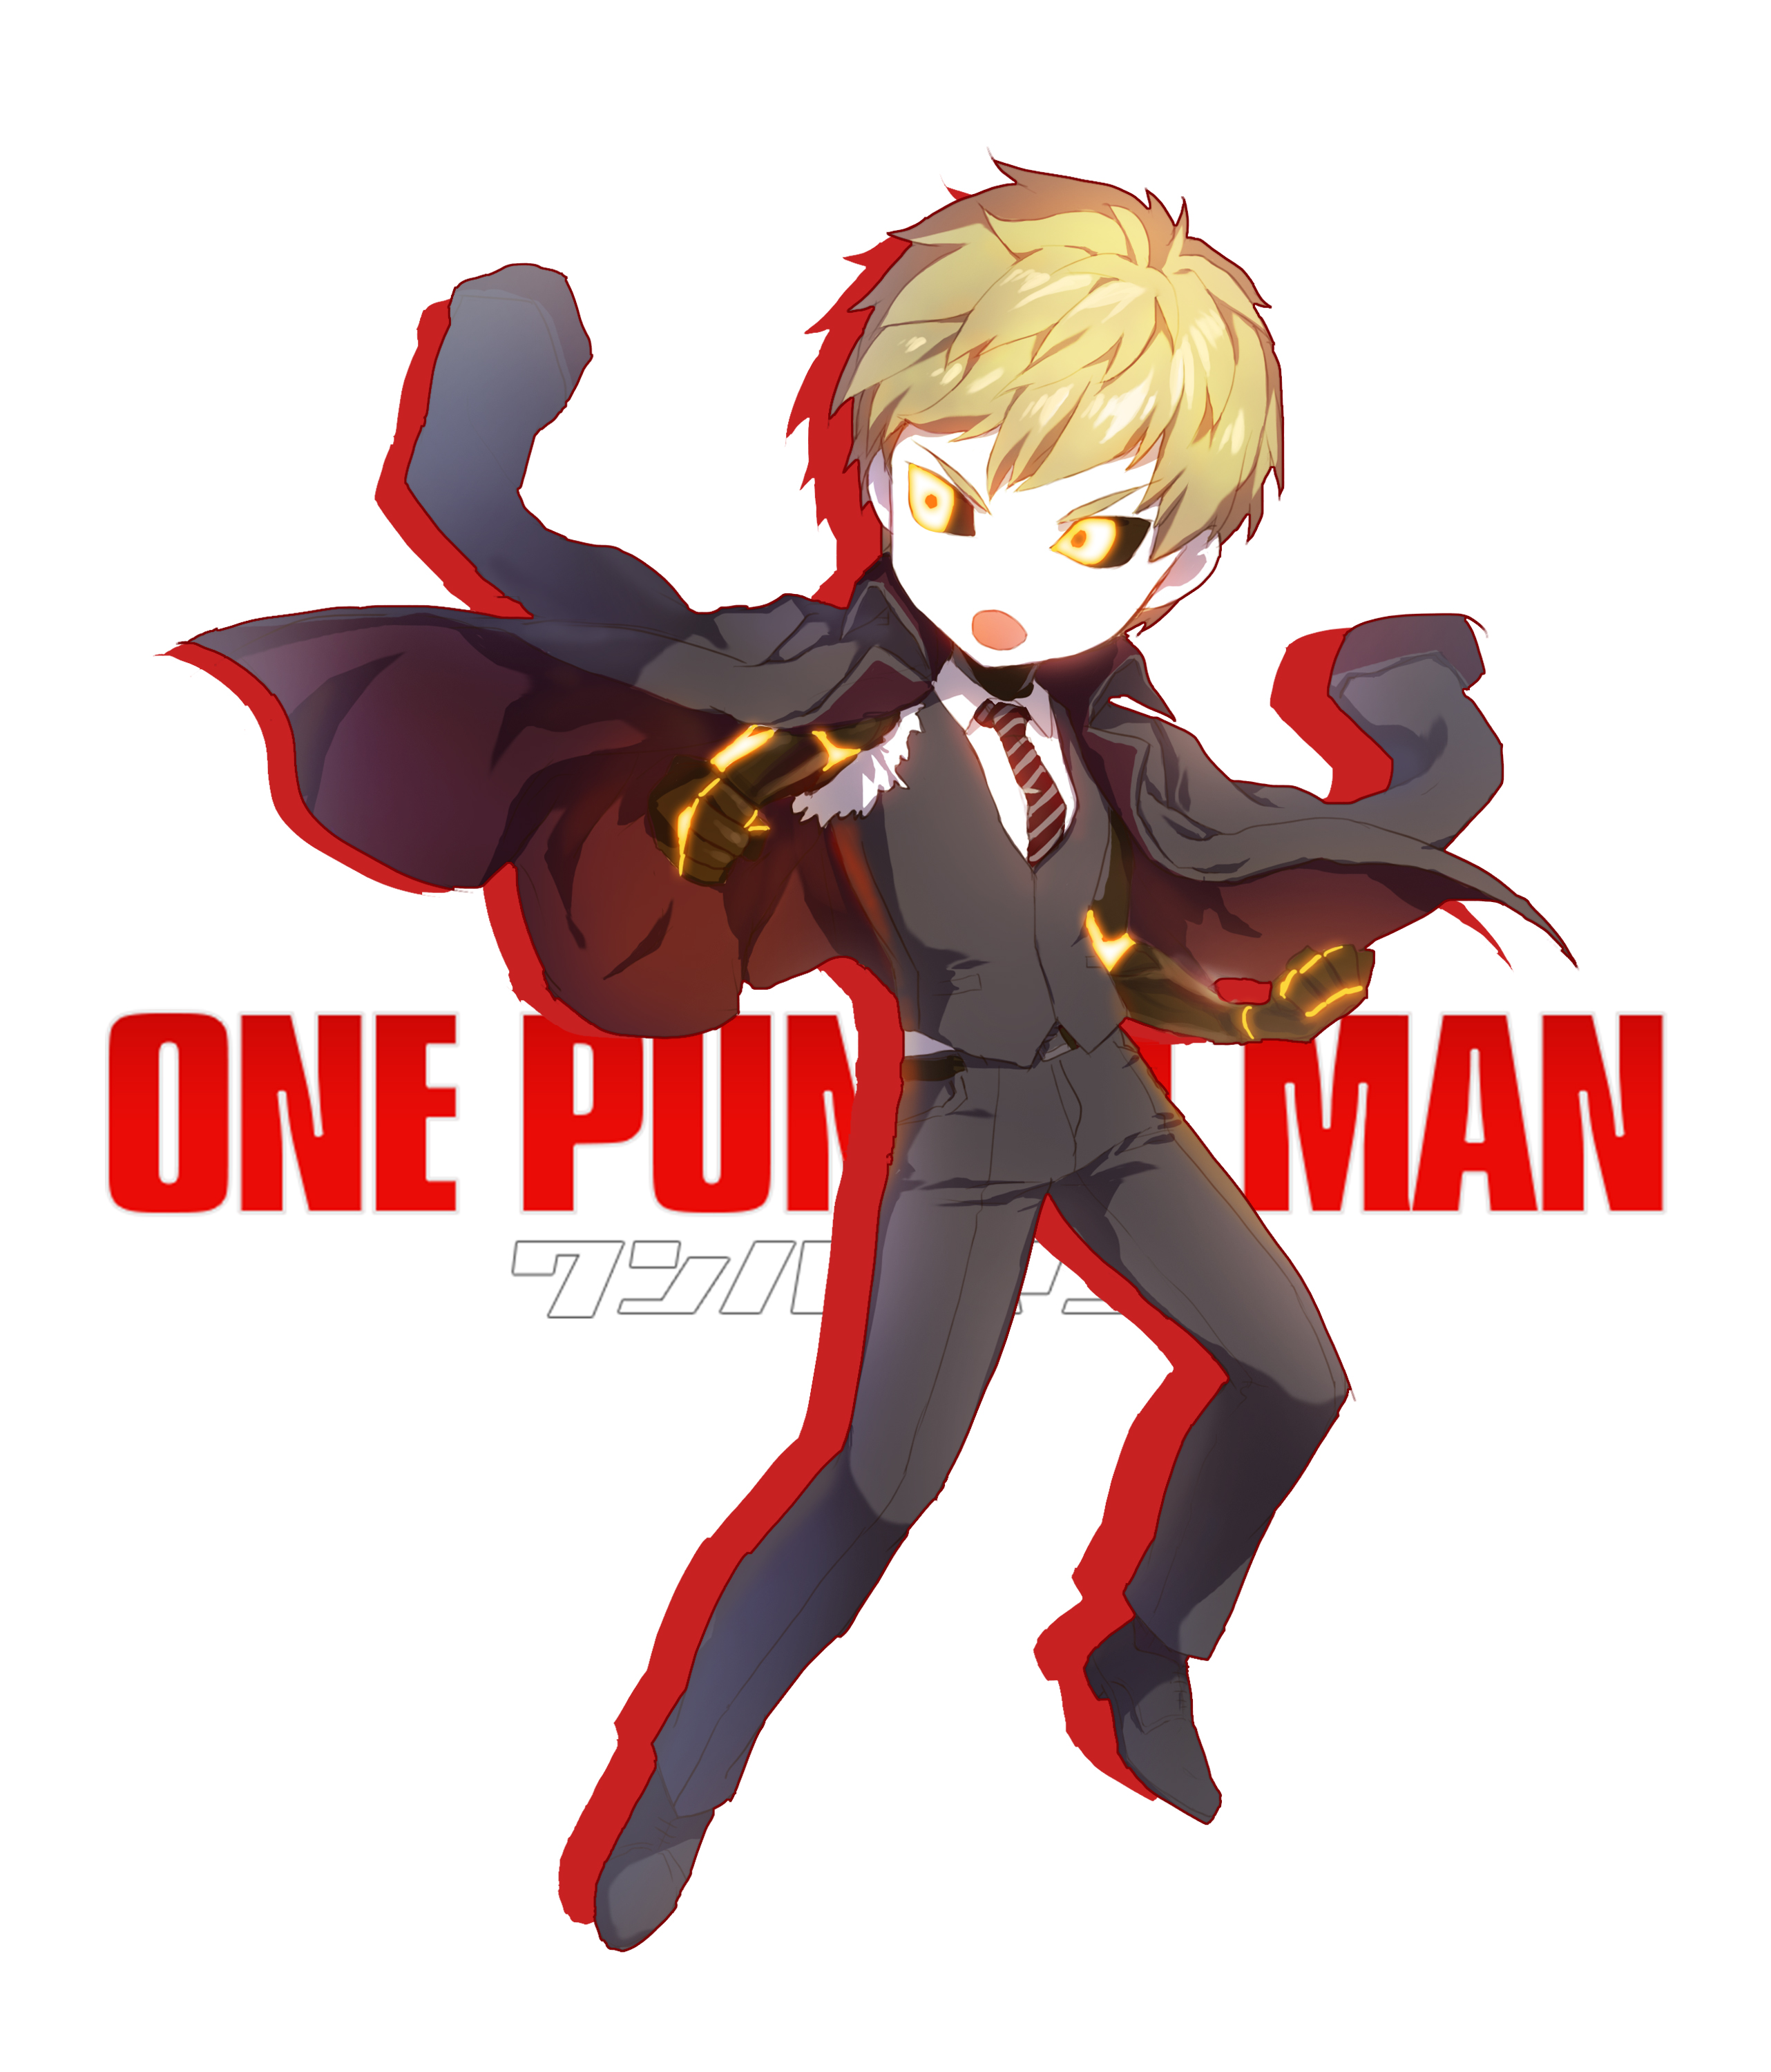 One Punch man插画图片壁纸